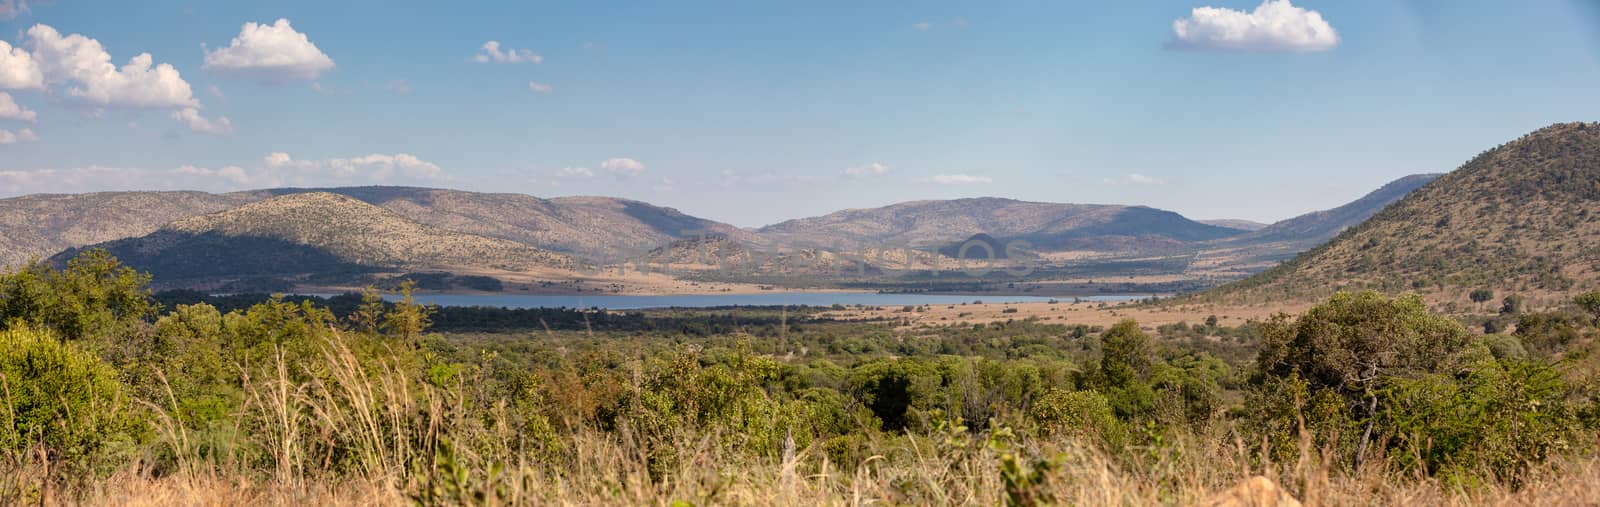 landscape Pilanesberg National Park, South Africa by artush